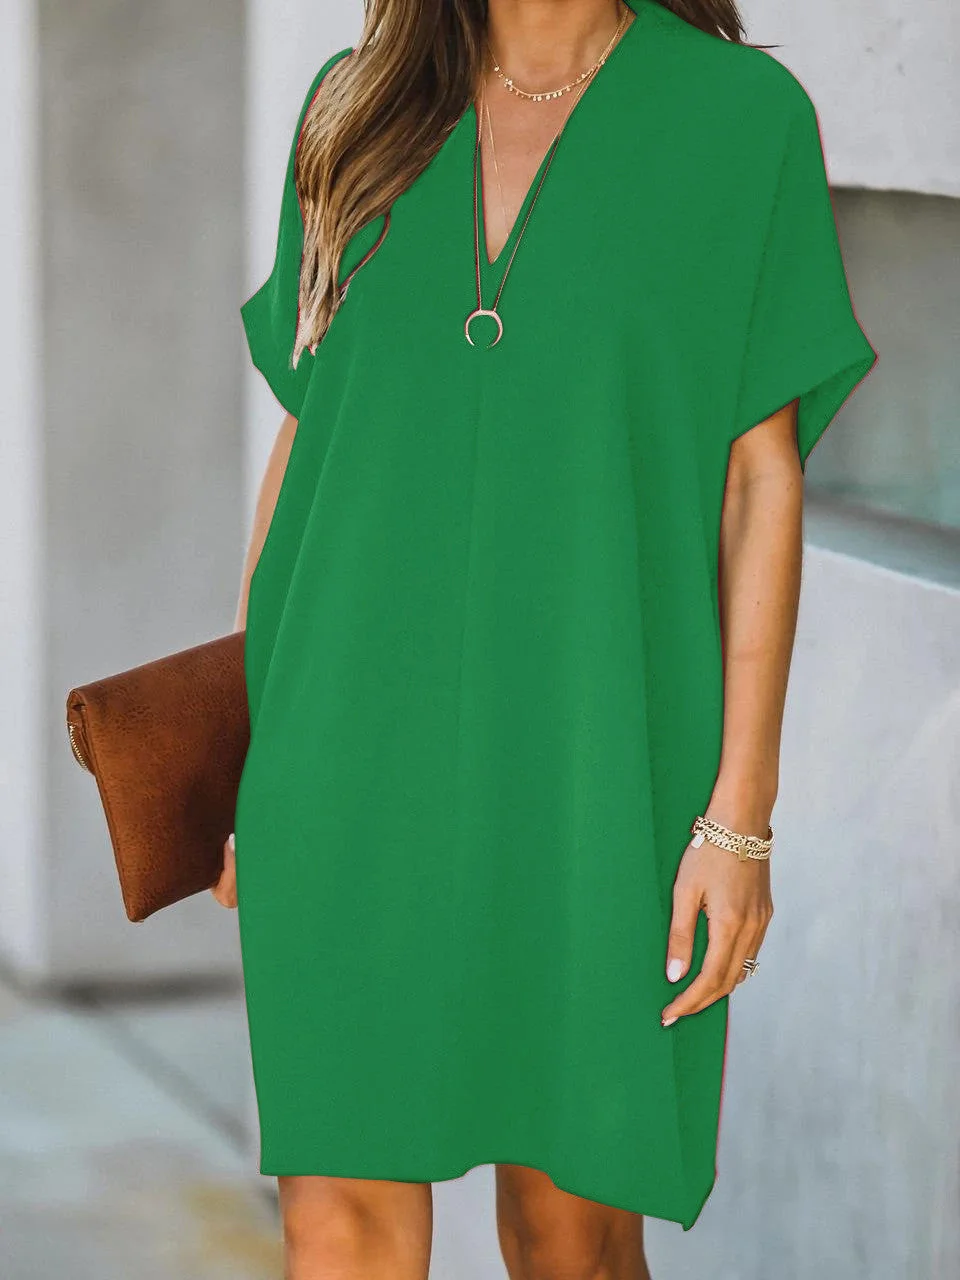 Women's Short Sleeve V-neck Solid Color Casual Dress